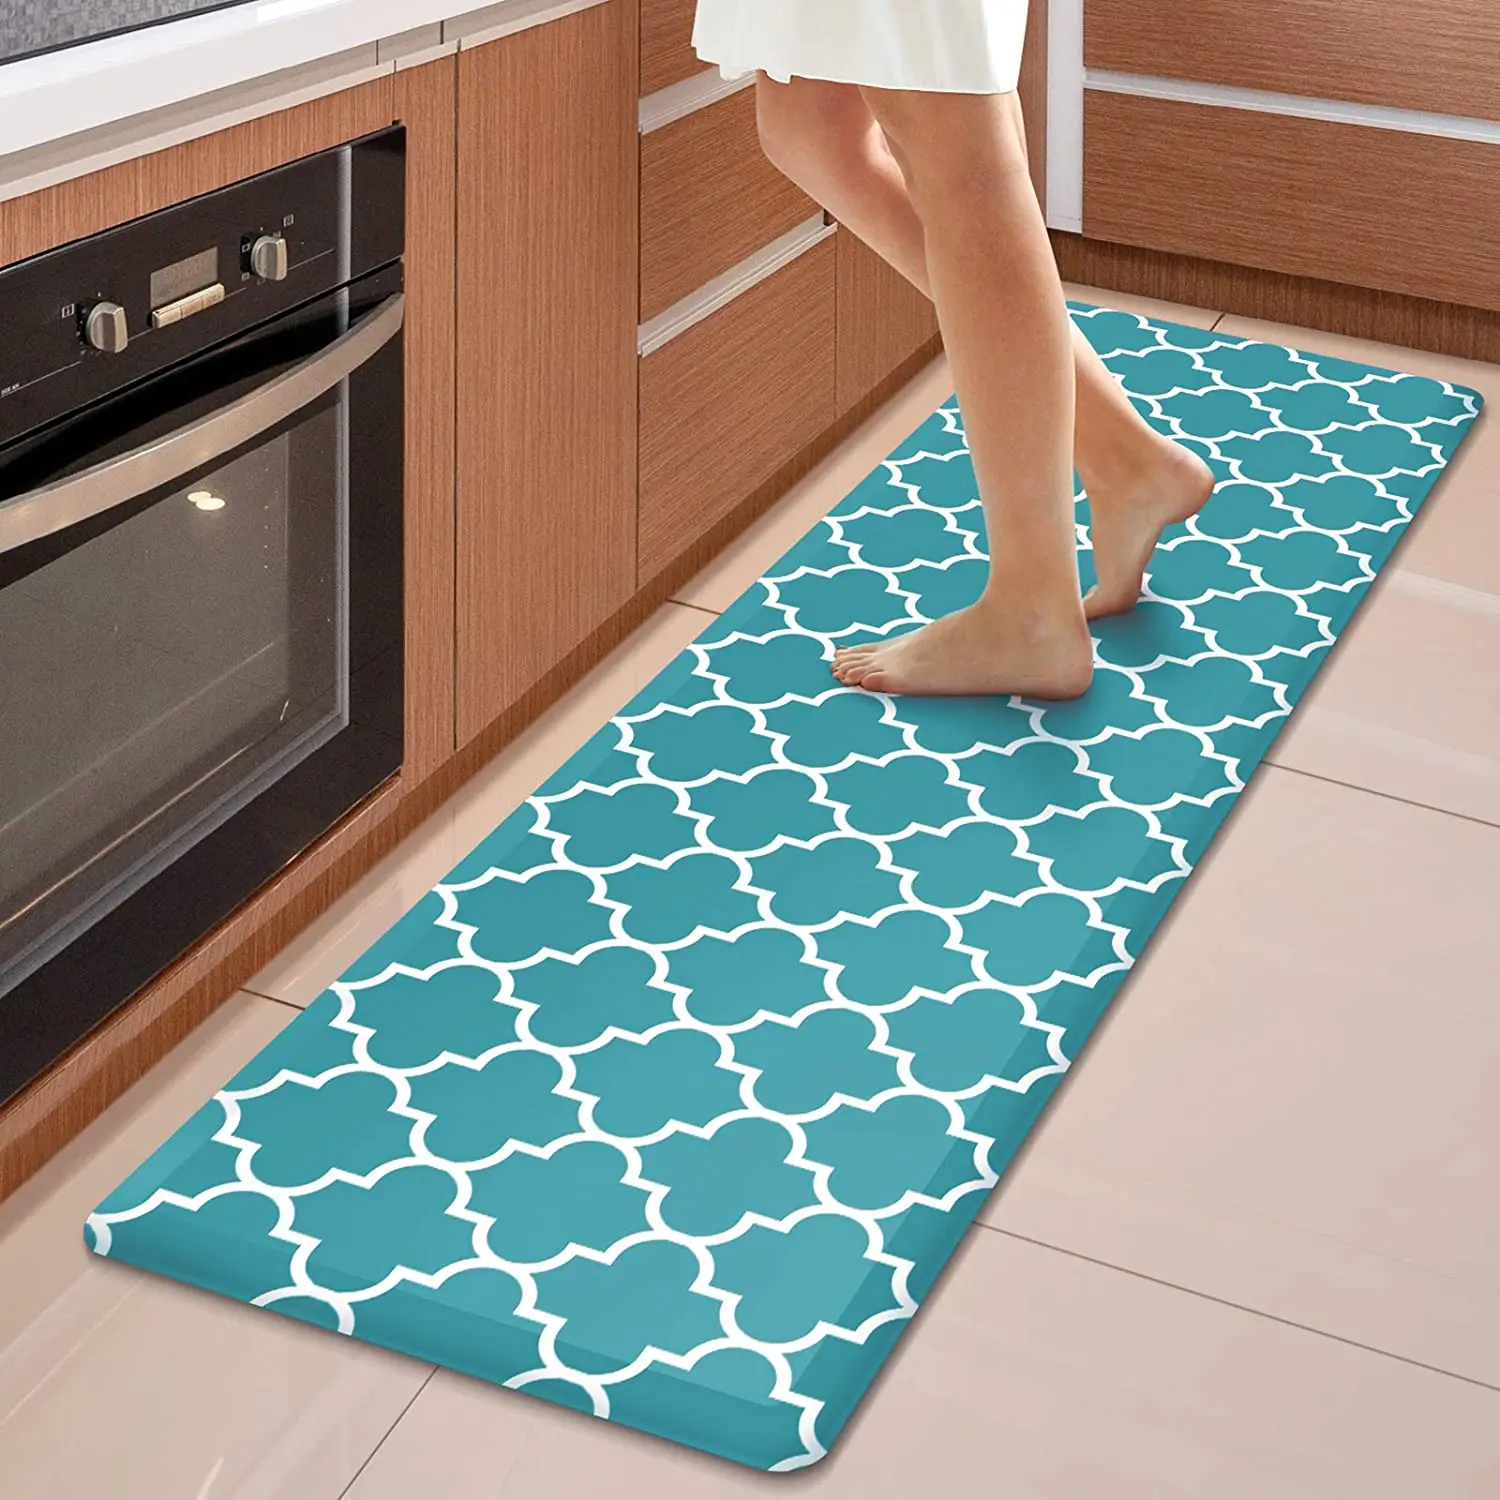 PVC Leather Kitchen Mat Eliminate Fatigue Kitchen Carpet Non-slip Floor Mat  Waterproof and Oil-proof Kitchen Rug